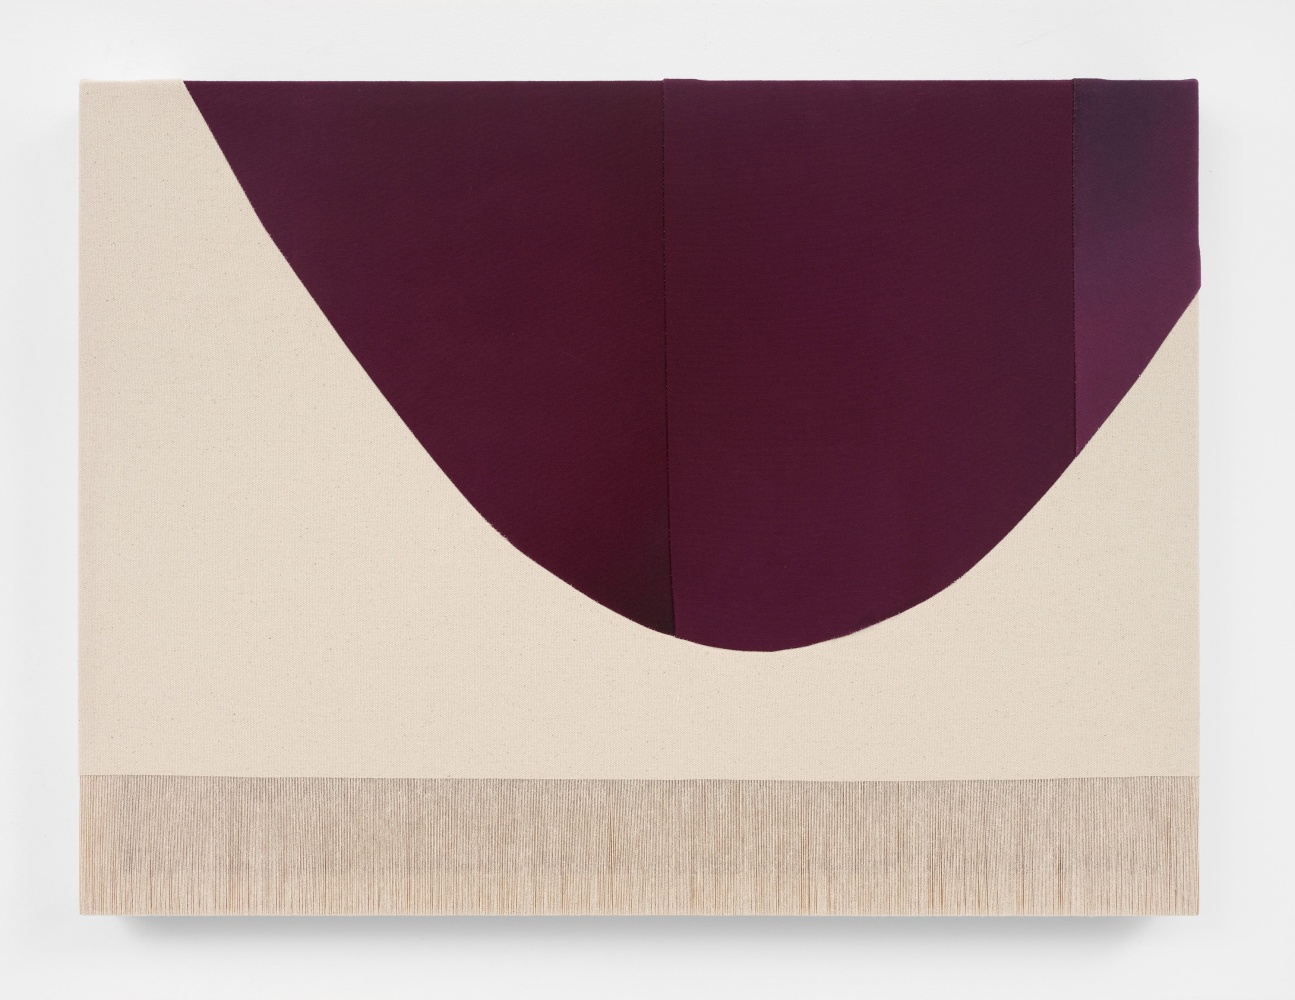 Rebecca Ward&amp;nbsp;
half circle (maroon), 2022
acrylic and dye on stitched canvas
18 x 24 inches (45.7 x 61 cm)&amp;nbsp;
(RWA22-14)&amp;nbsp;